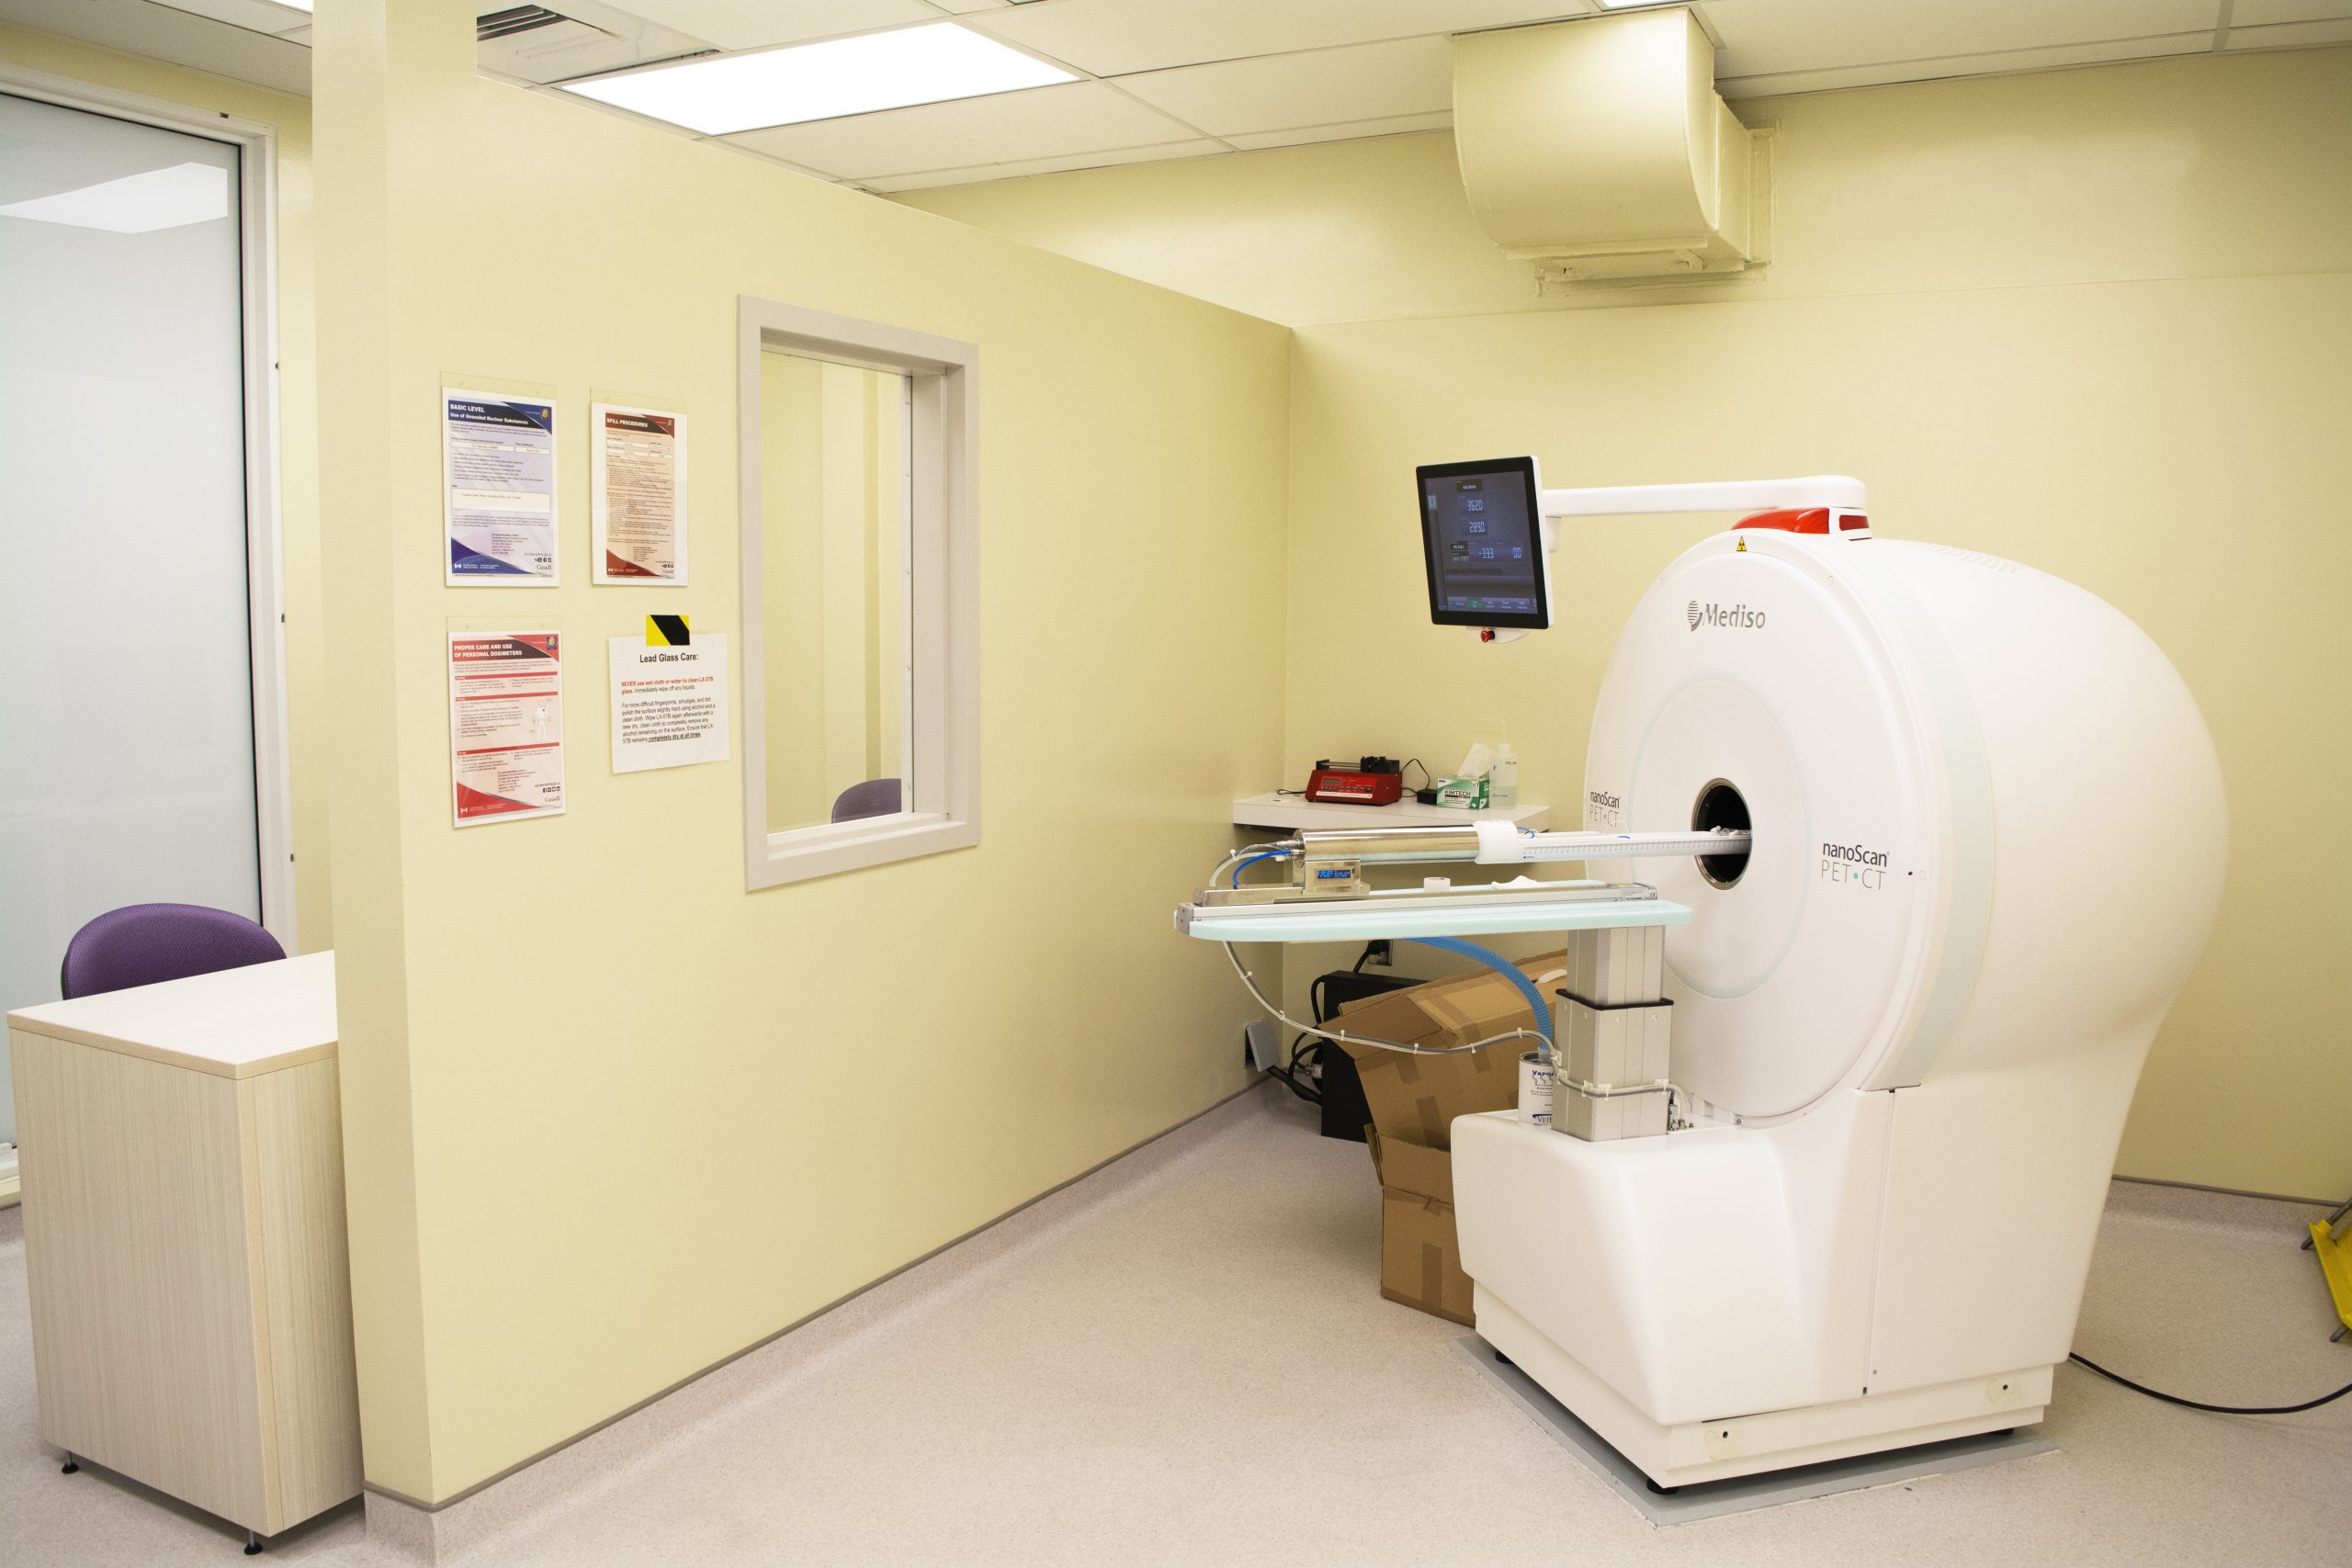 CAMH PET/CT Scanner Room Renovation